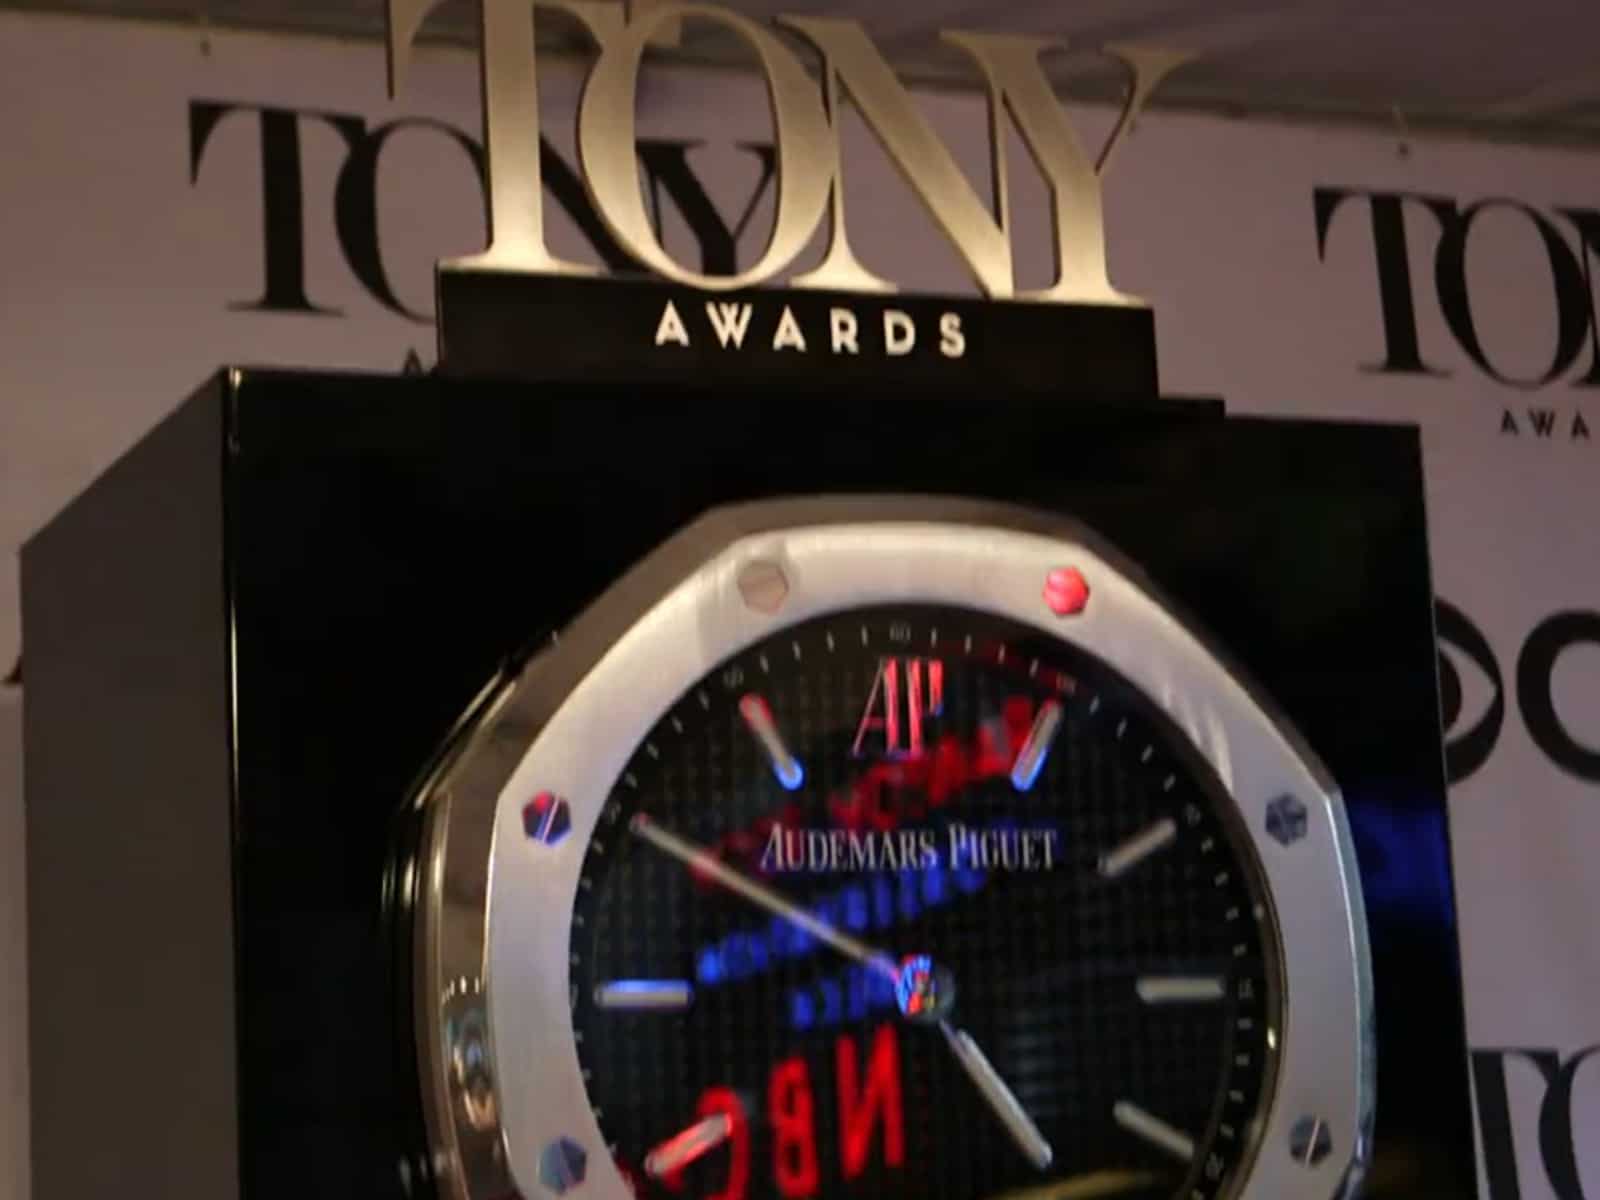 Tony Awards New York 2014 Audemars Piguet